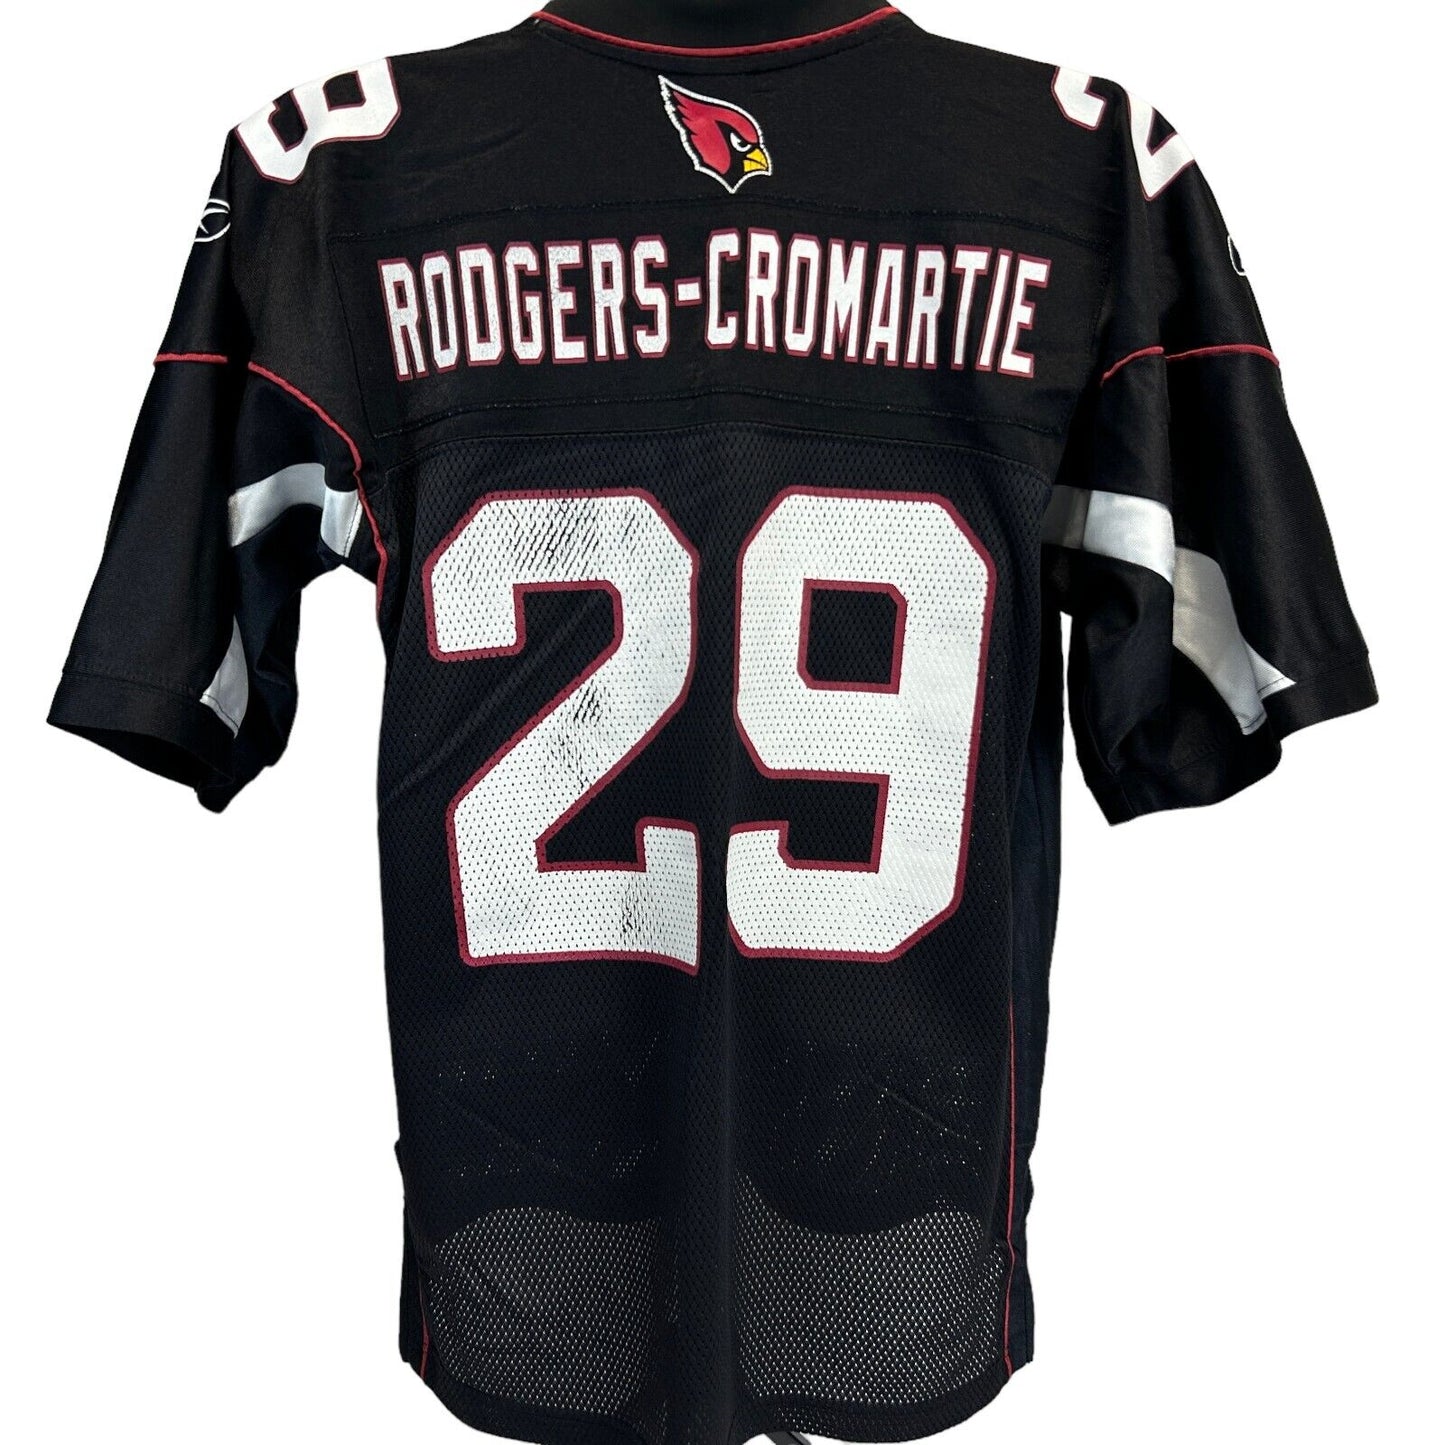 Dominique Rodgers-Cromartie Arizona Cardinals Jersey Reebok NFL Football Medium